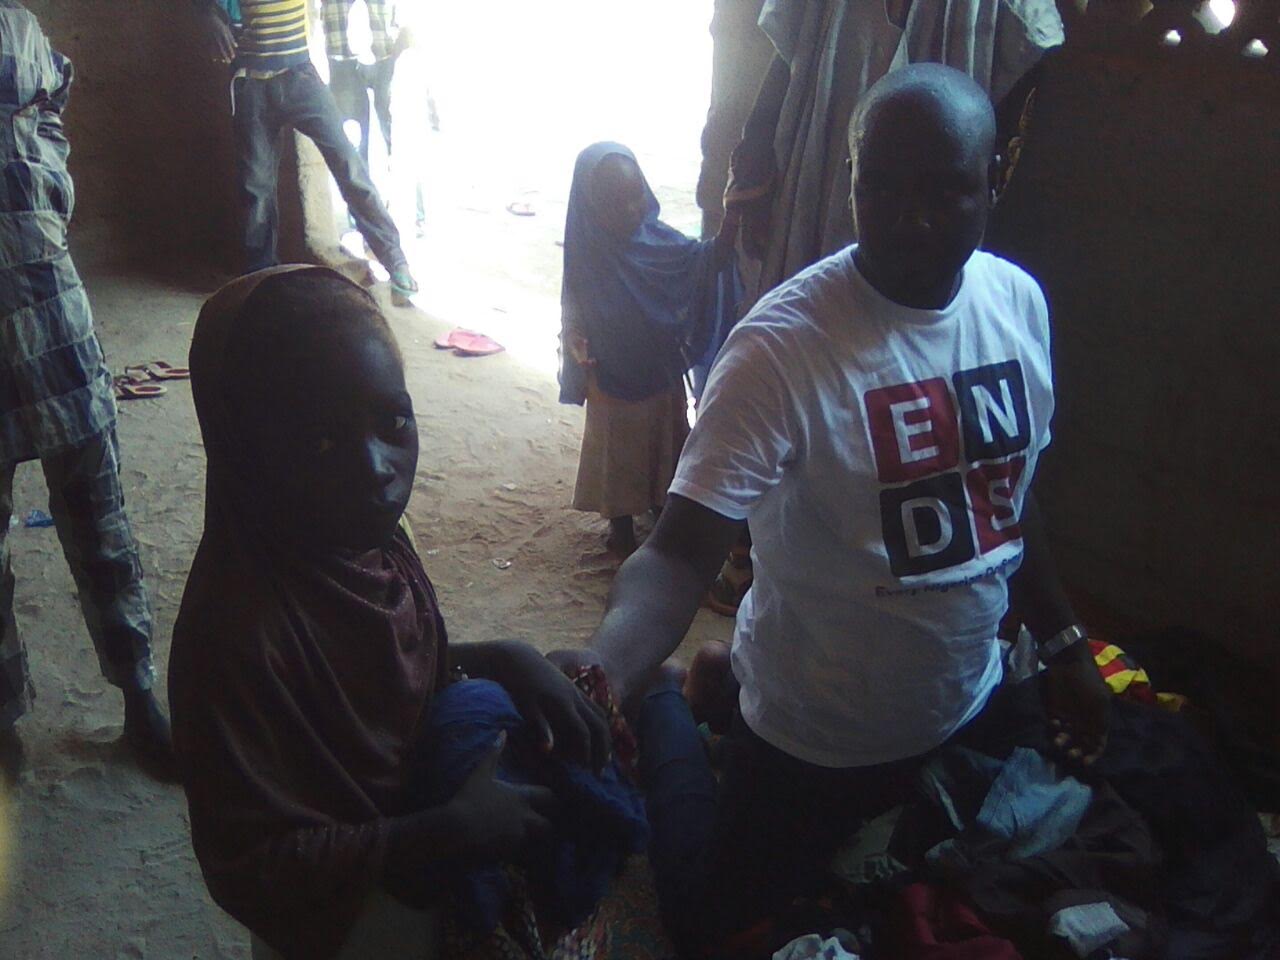 ENDS team at work in Boko Haram devastated Borno